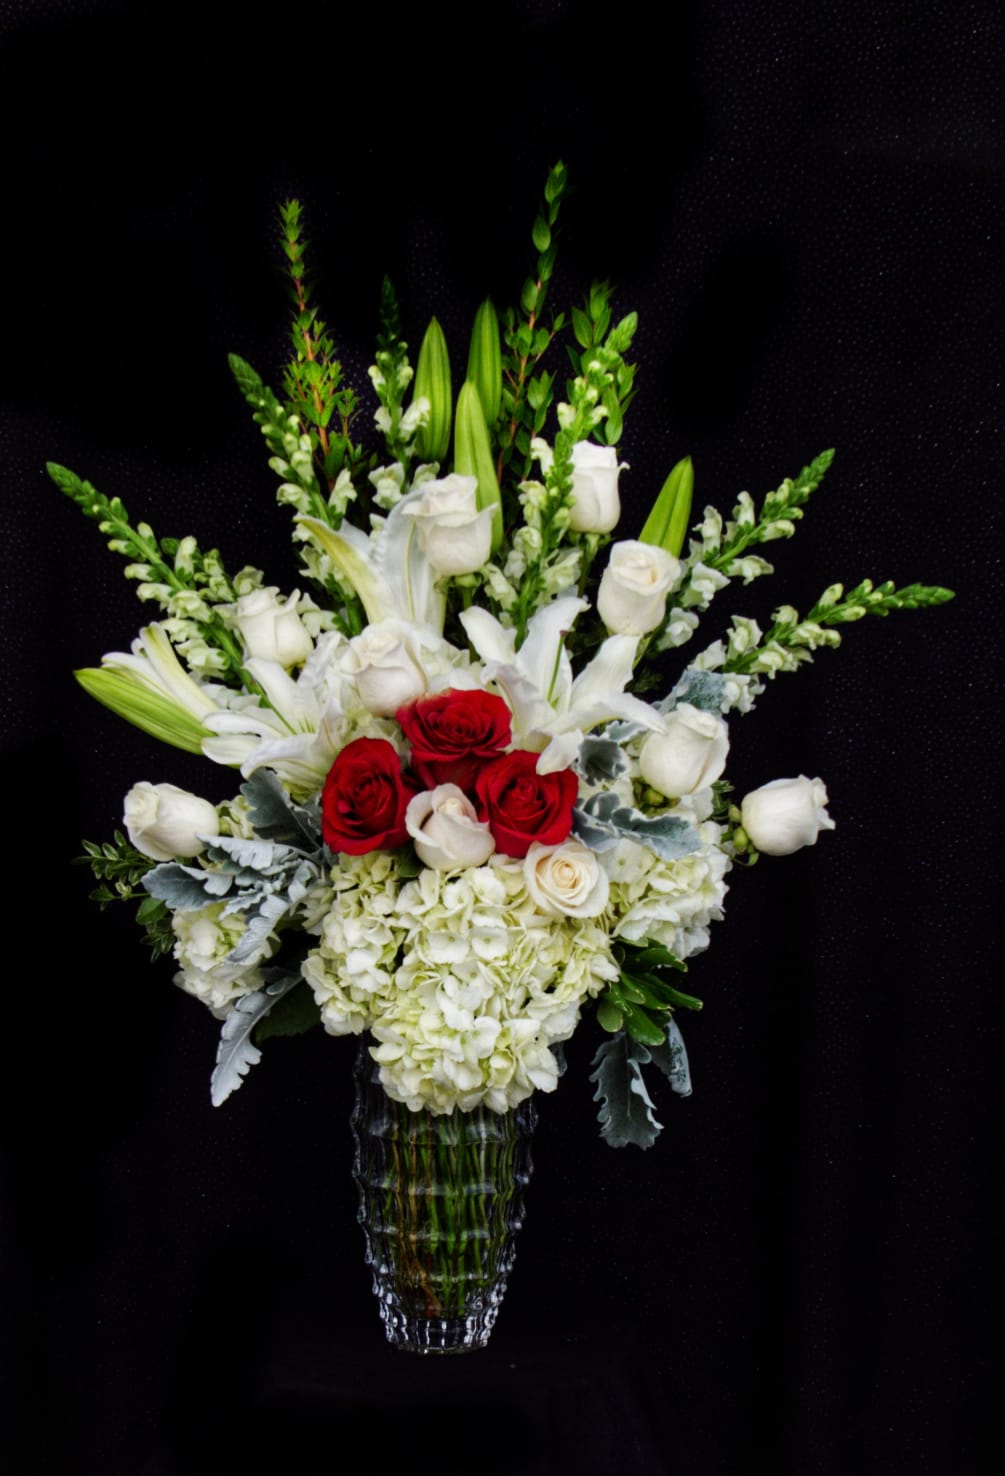 Beautiful design including all premium flowers: casa blanca lily, rose, snapdragon, hydrangea...